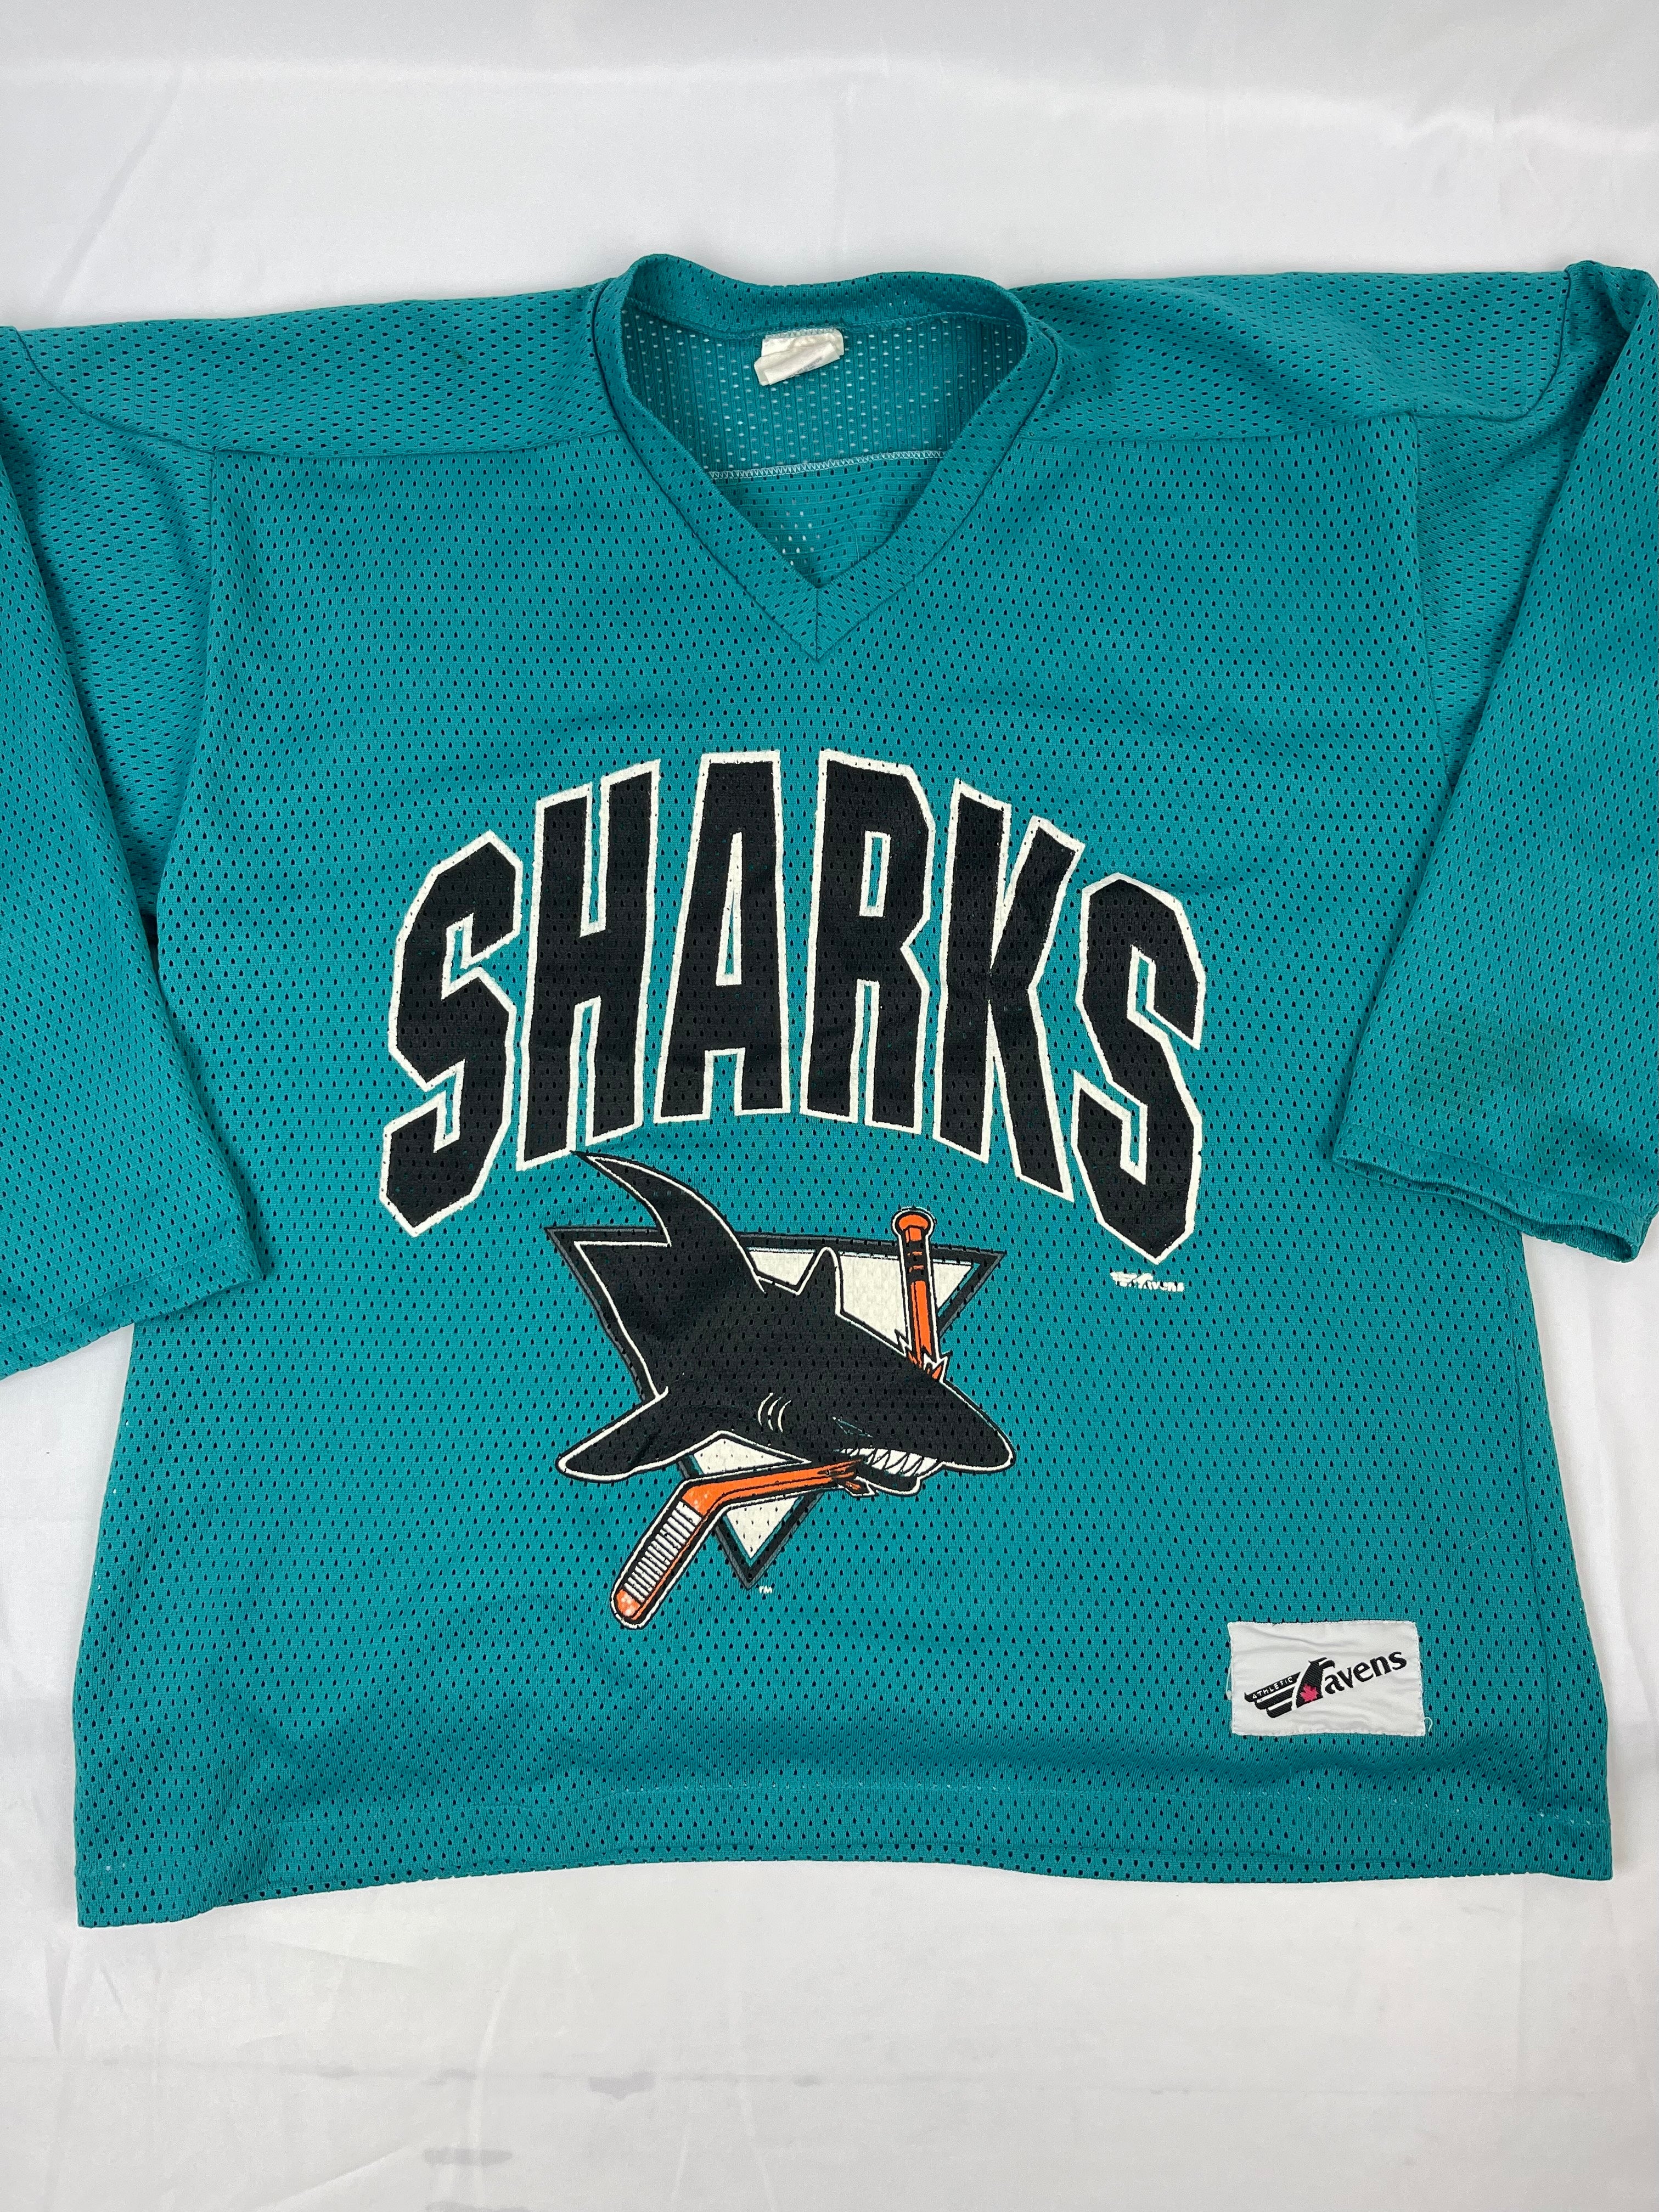 Vintage Sharks gear